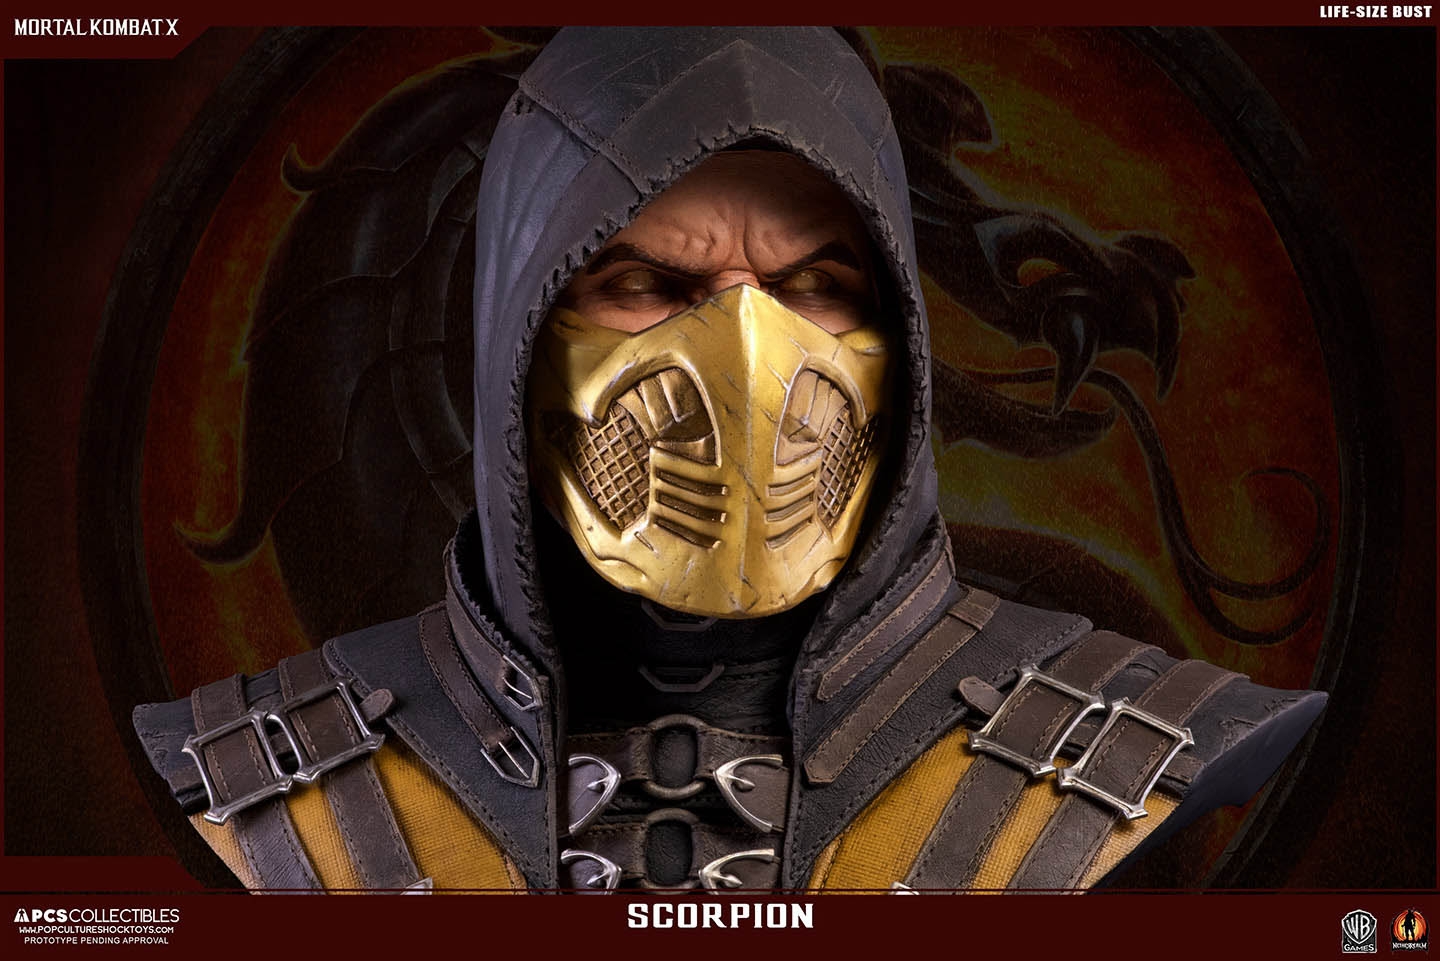 Scorpion-Bust-Pop-culture-Shock-Mortal-Kombat-X-011.jpg